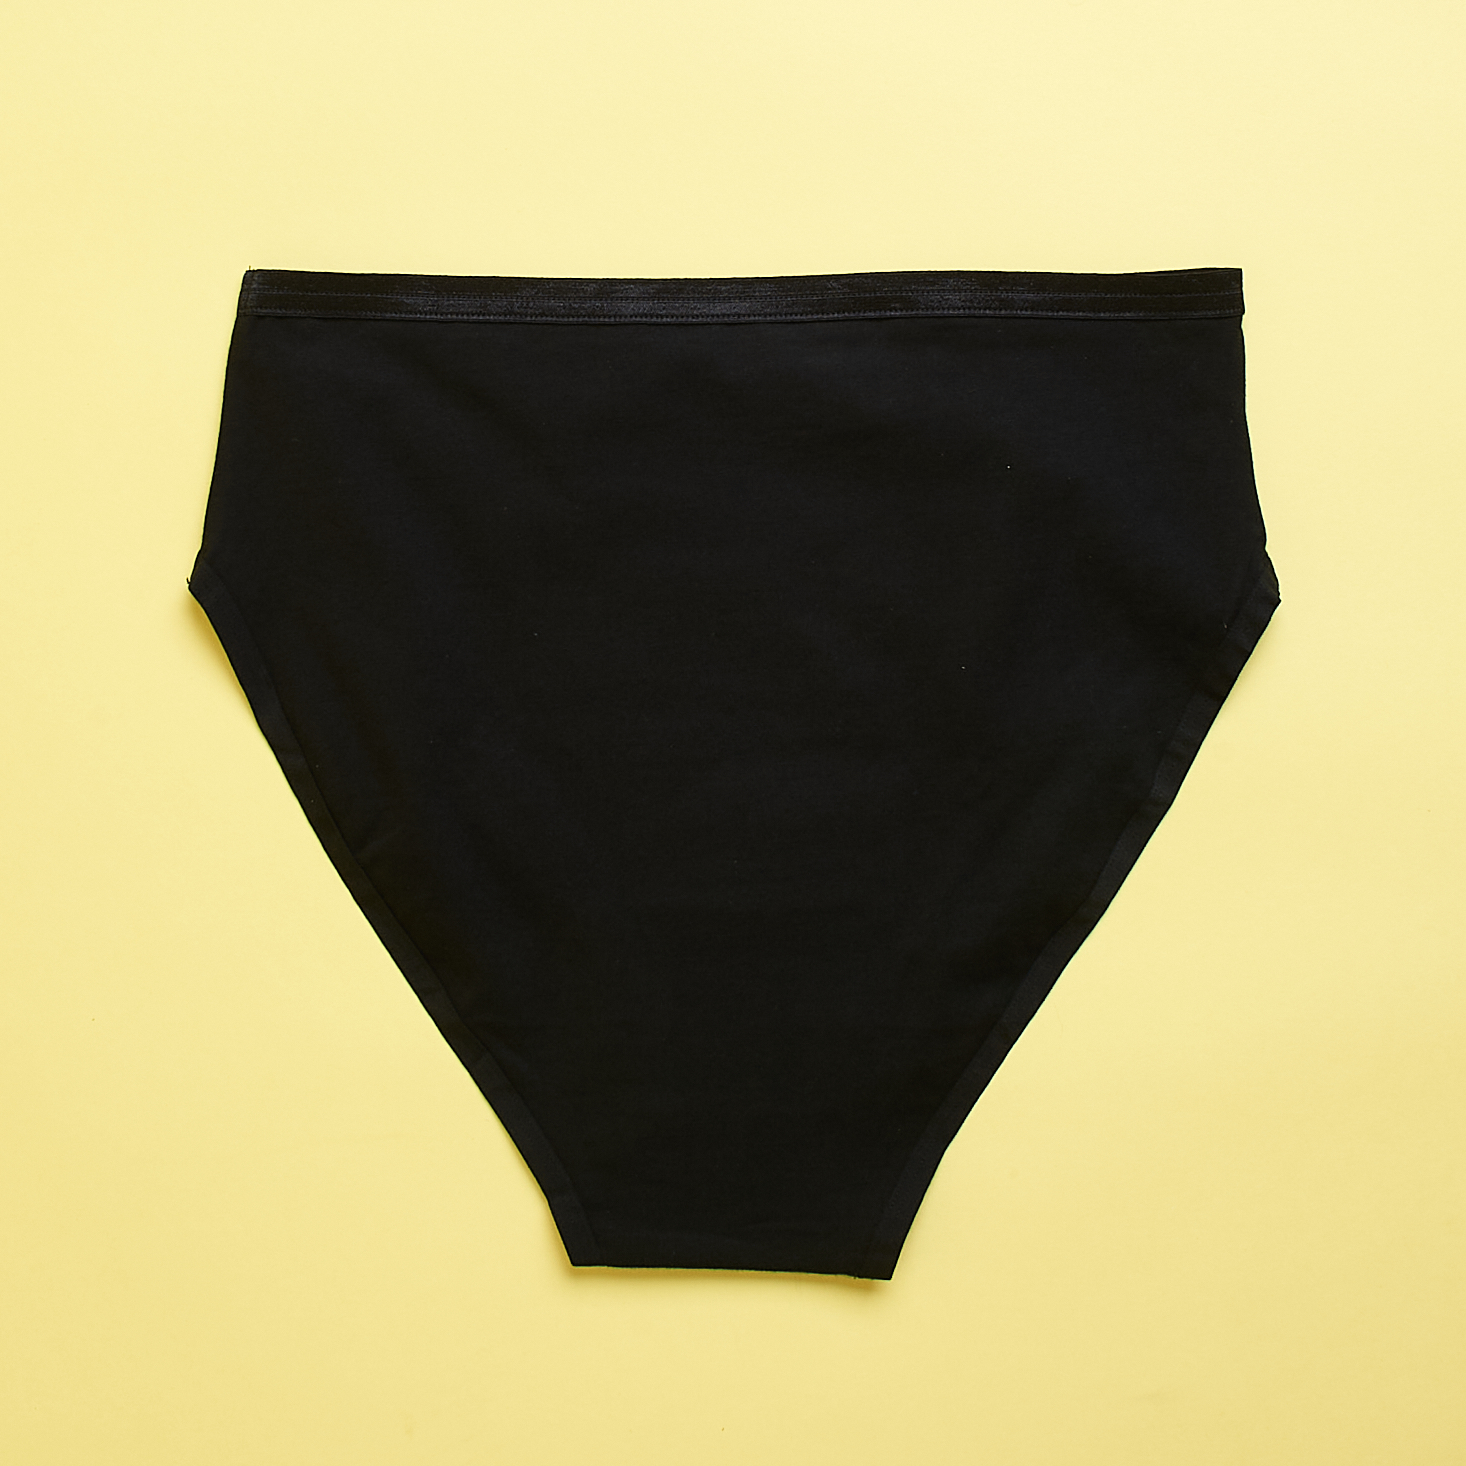 high-rise bikini underwear from Knickey